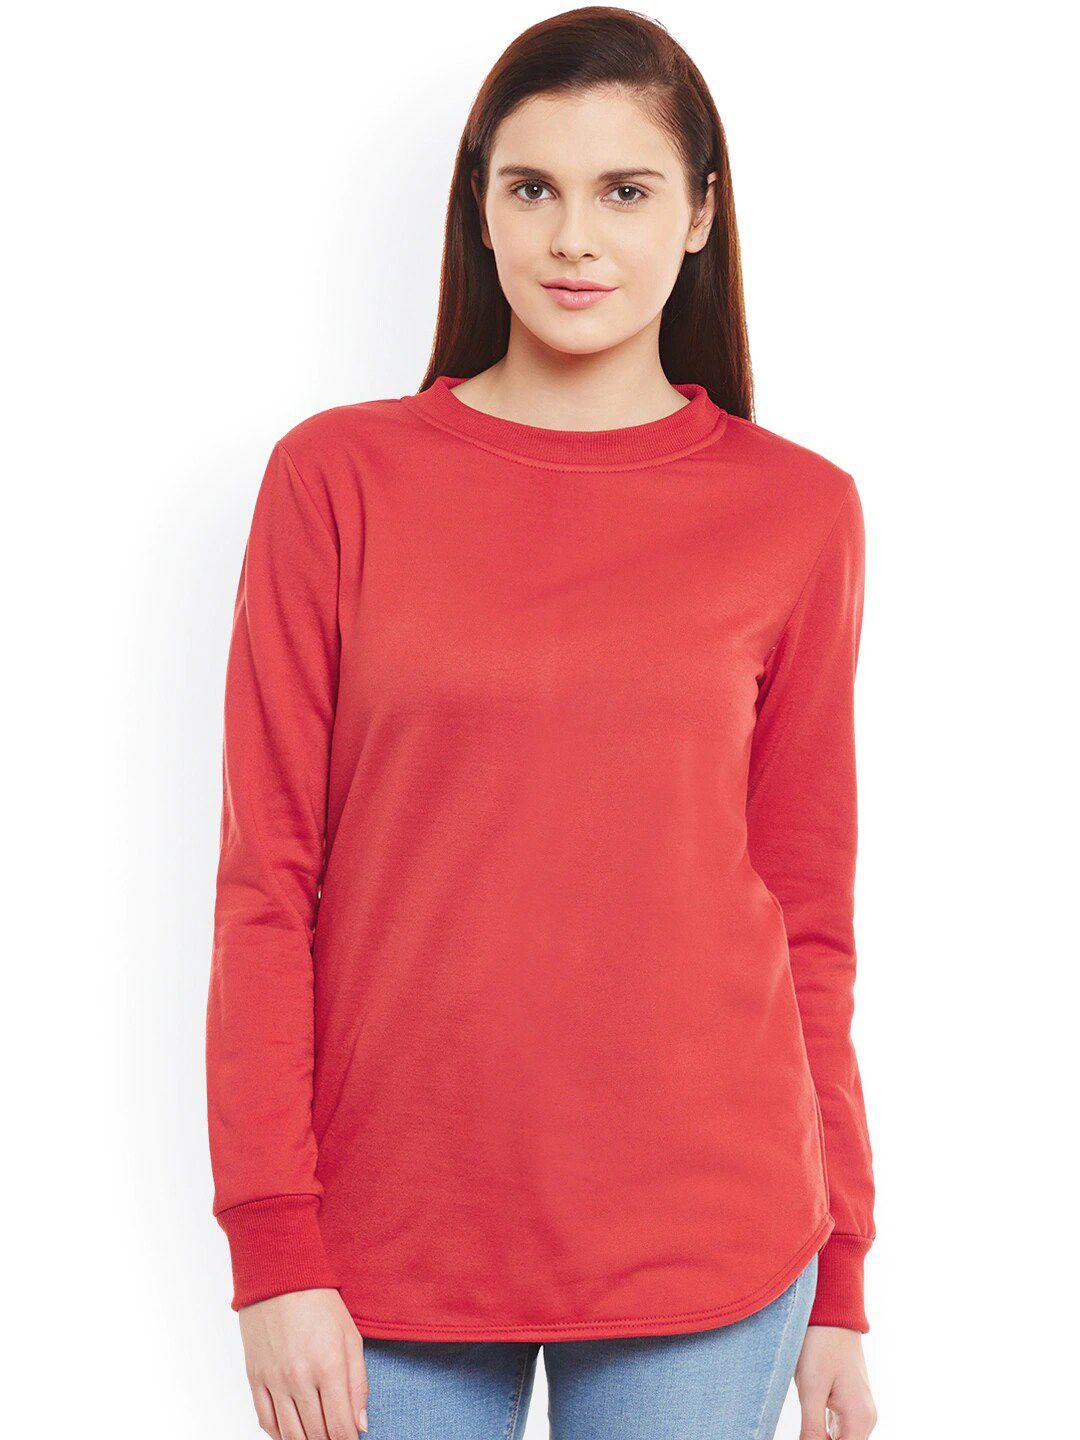 baesd women red sweatshirt